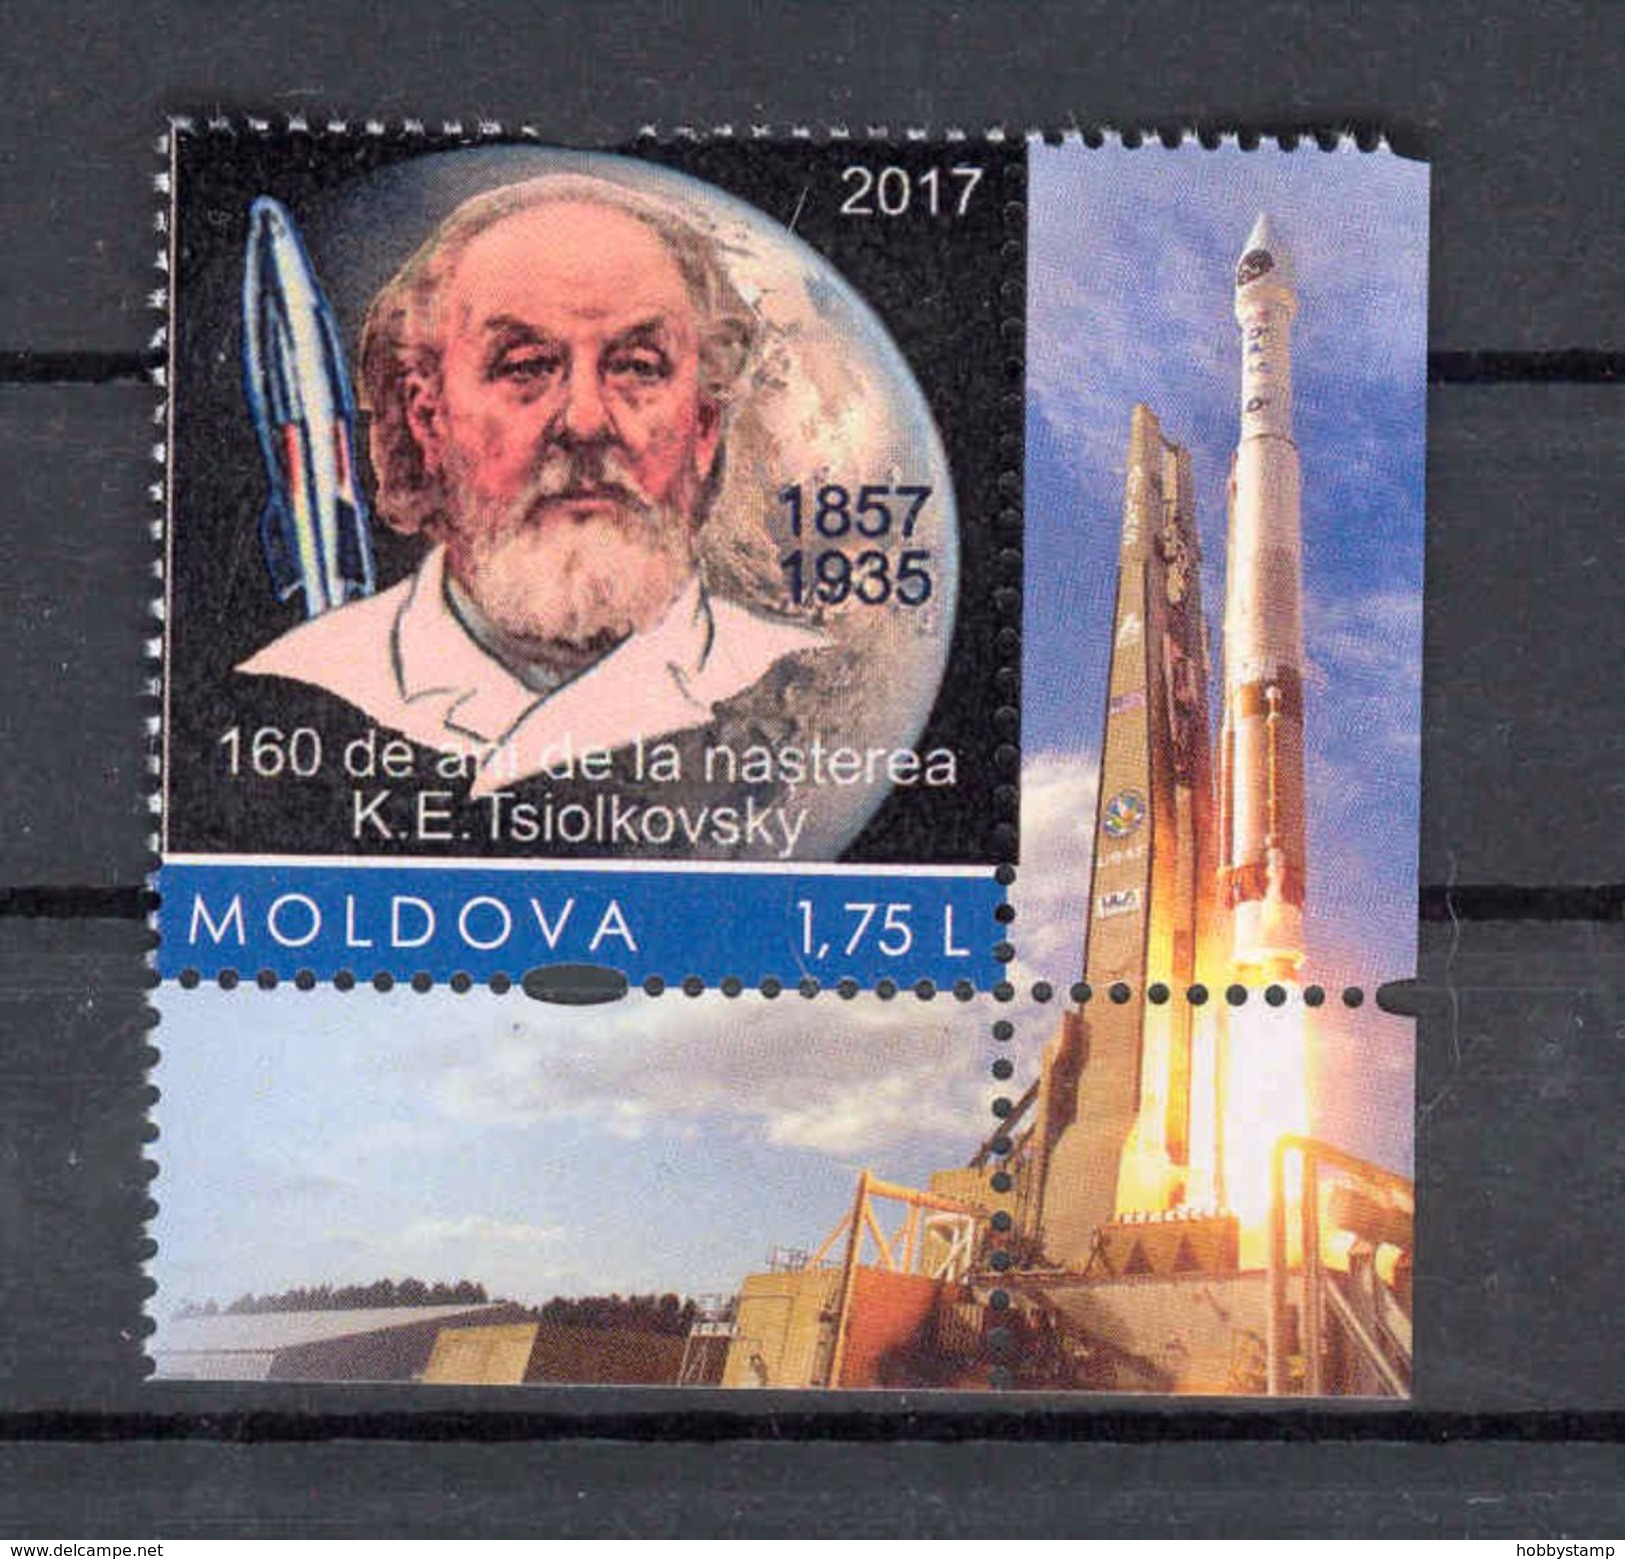 Moldova 2017 160th Anniversary Of The Birth Of Tsiolkovsky Personalized Stamp MNH - Moldova